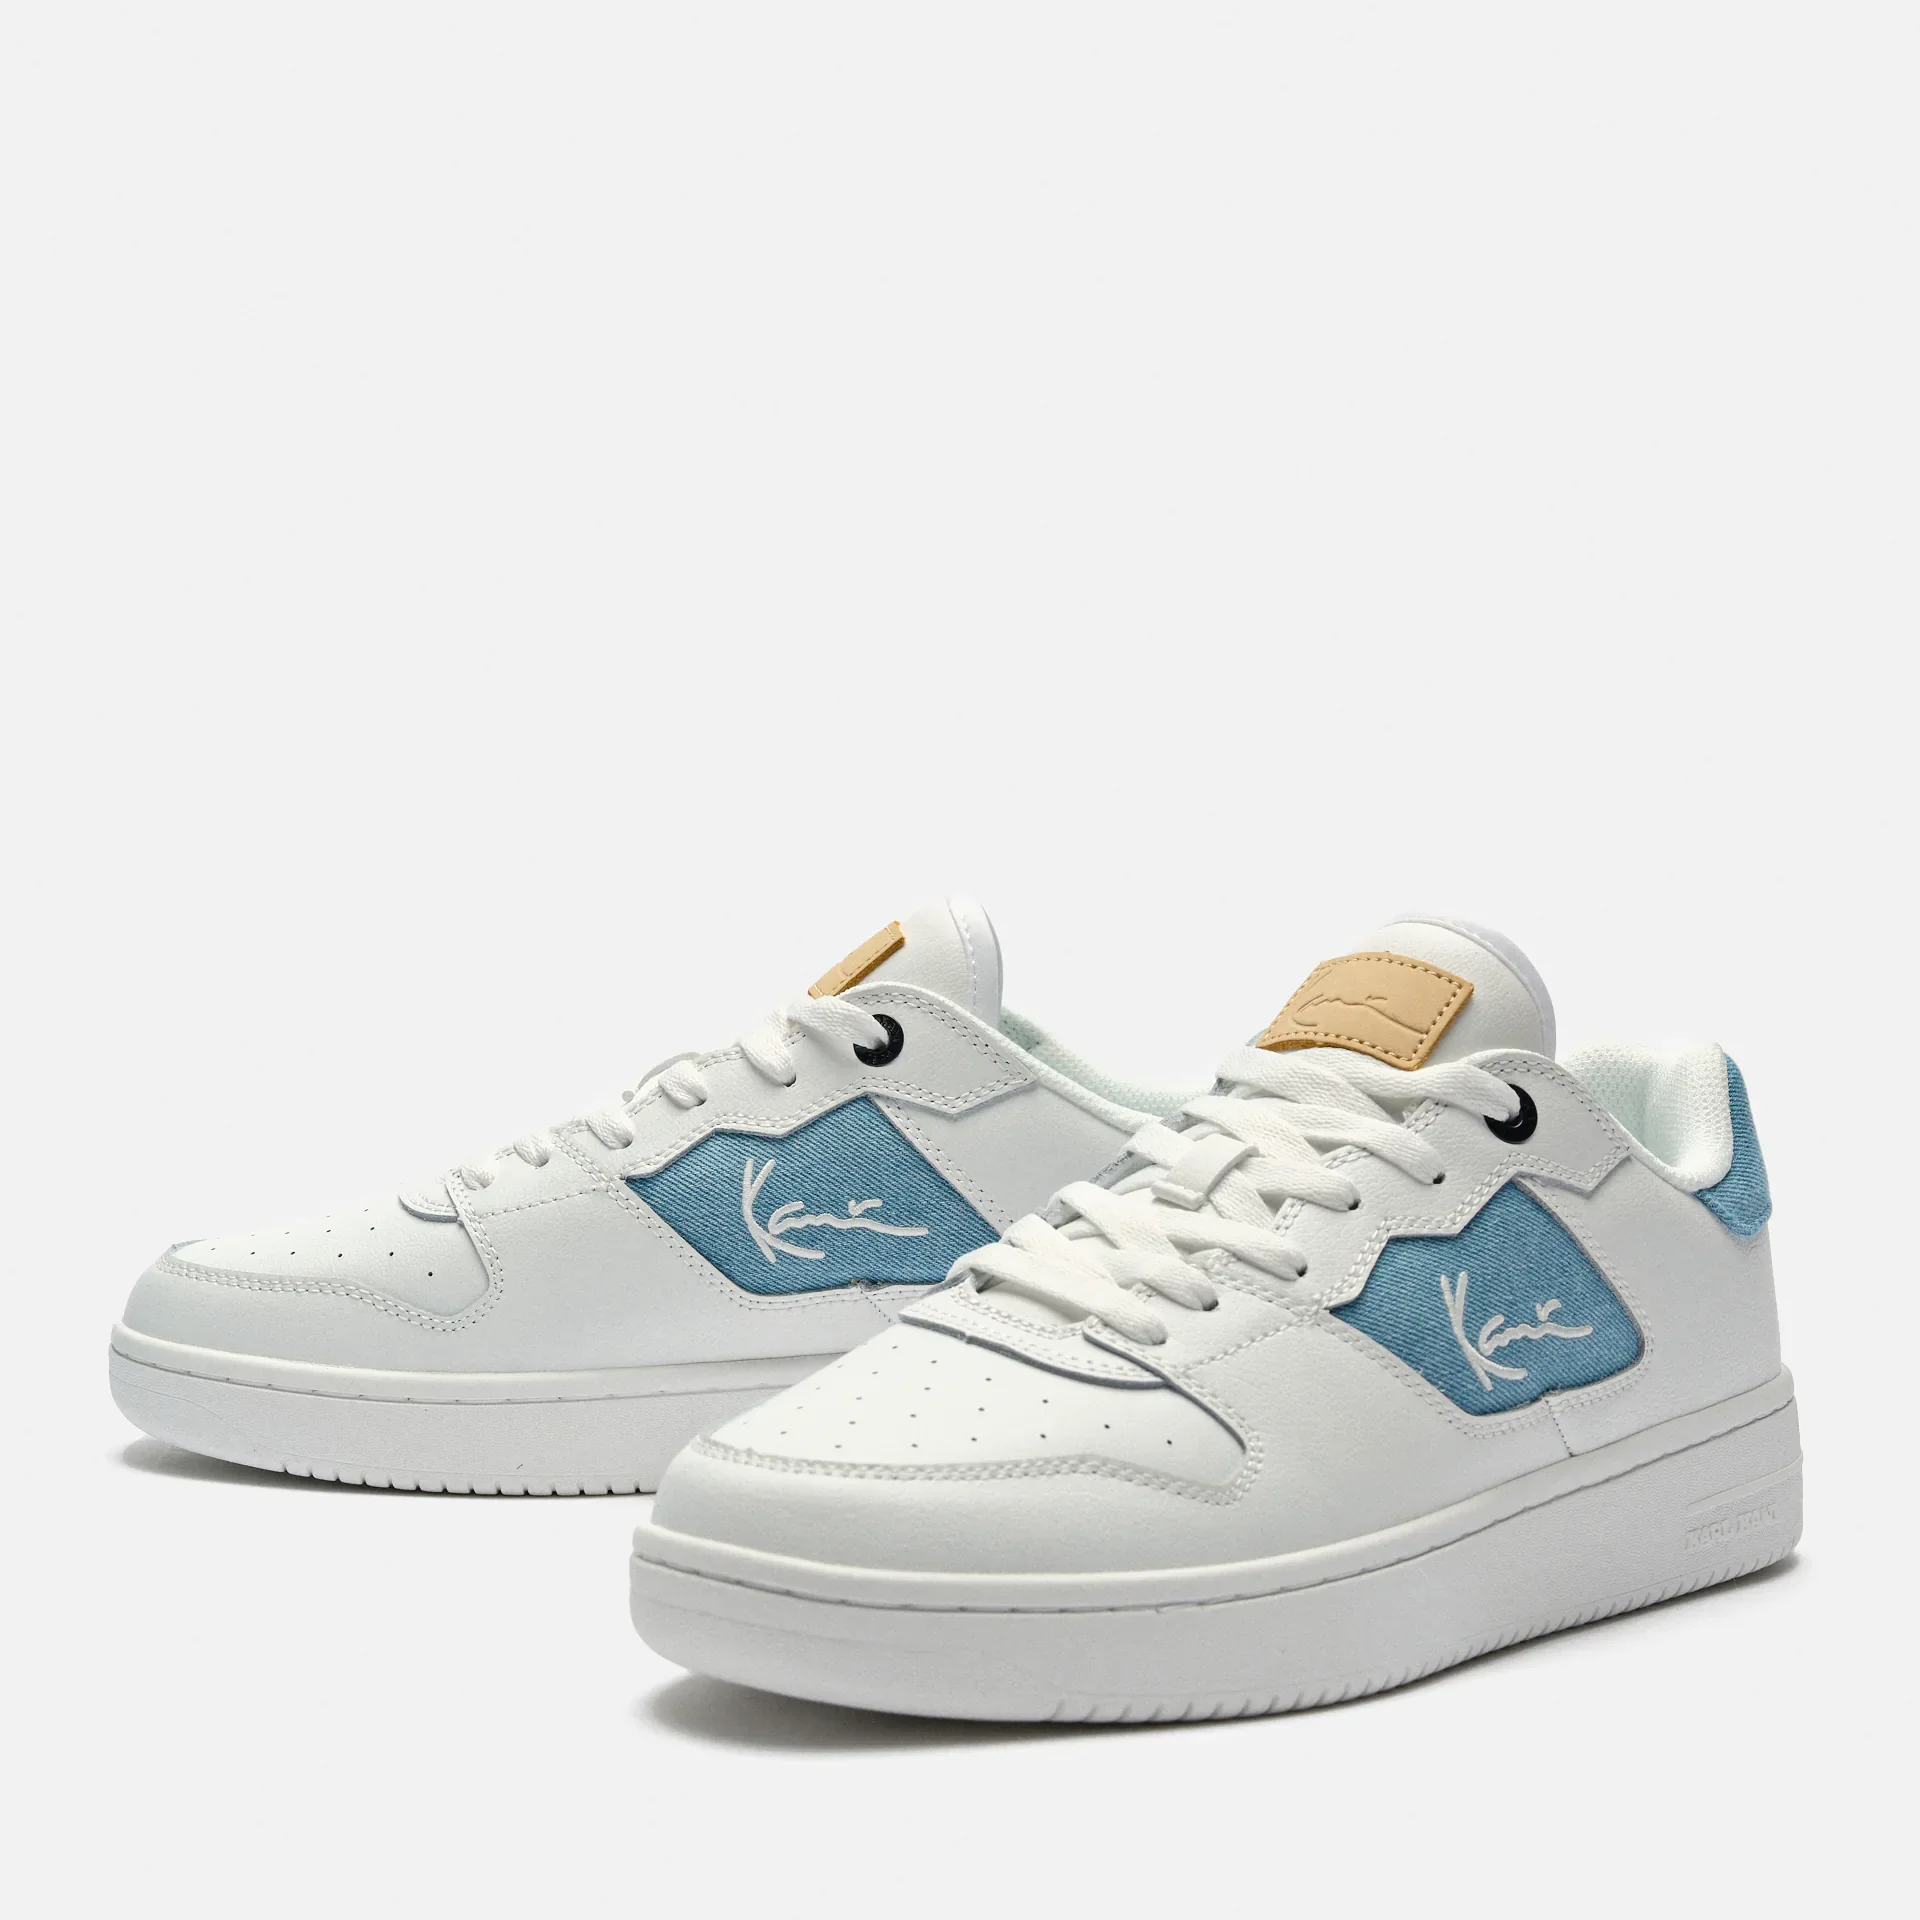 Karl Kani 89 Premium Sneaker White/Denim Blue